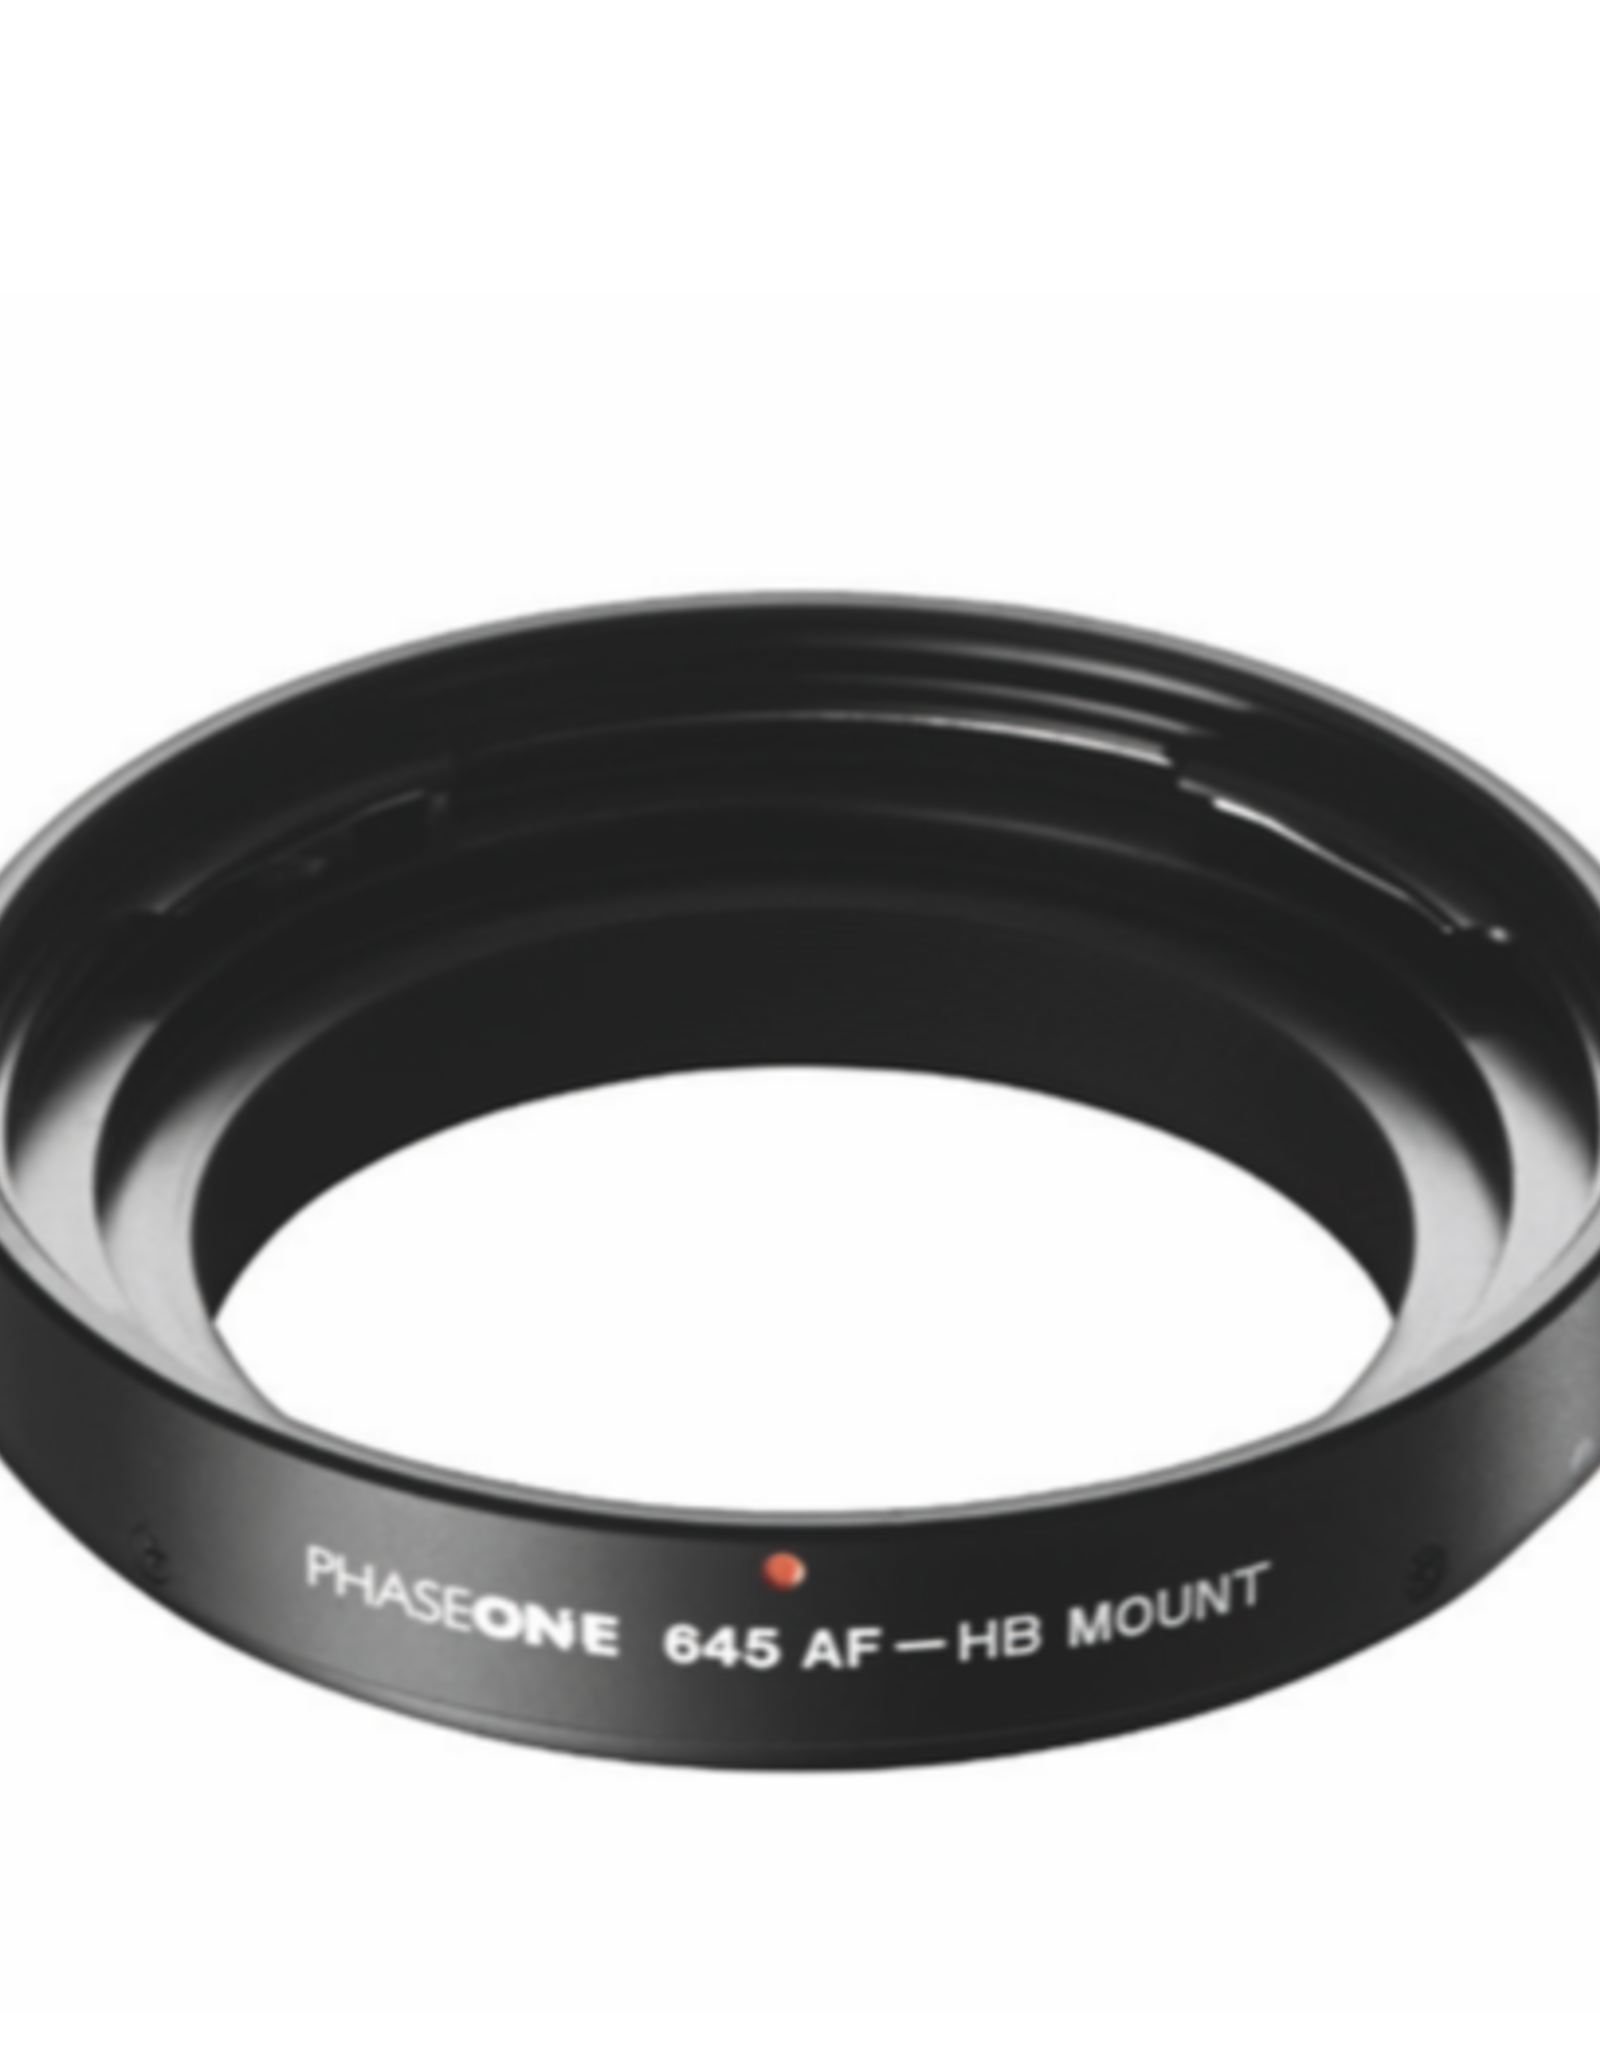 Phase One Phase One Multimount lens adaptor for Hasselblad V lenses